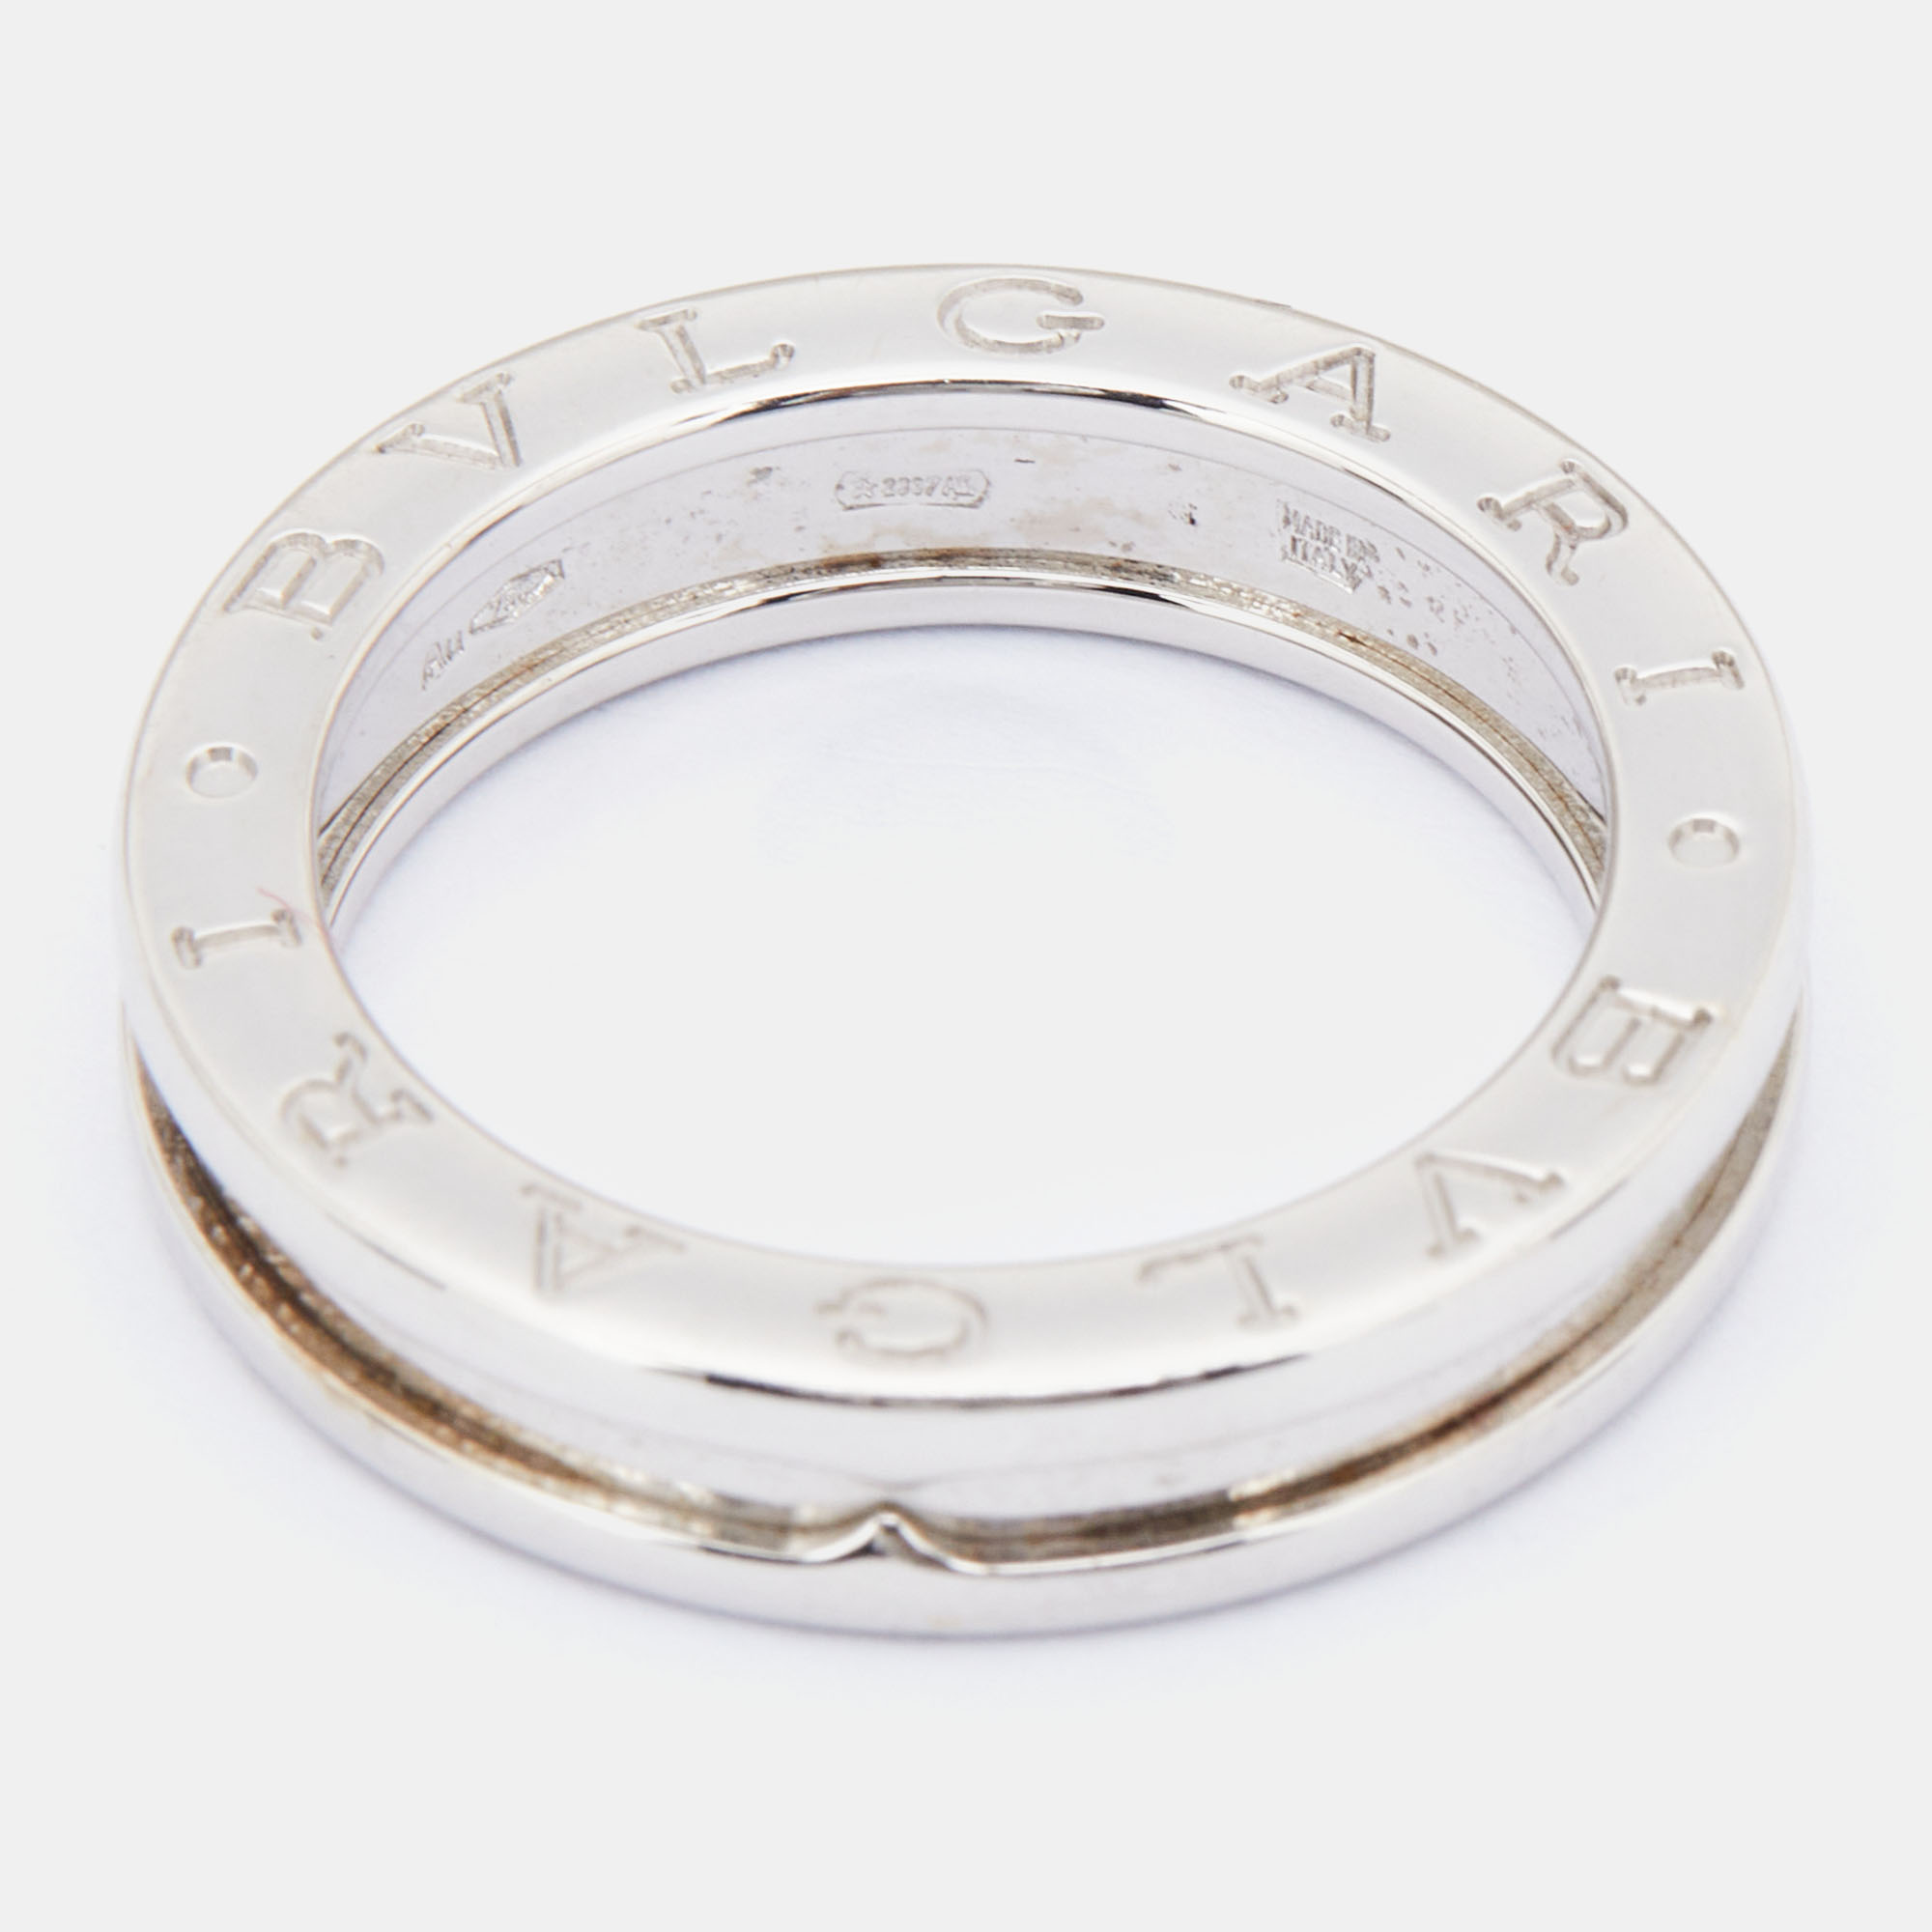 Bvlgari B.Zero1 1-Band 18k White Gold Ring Size 54